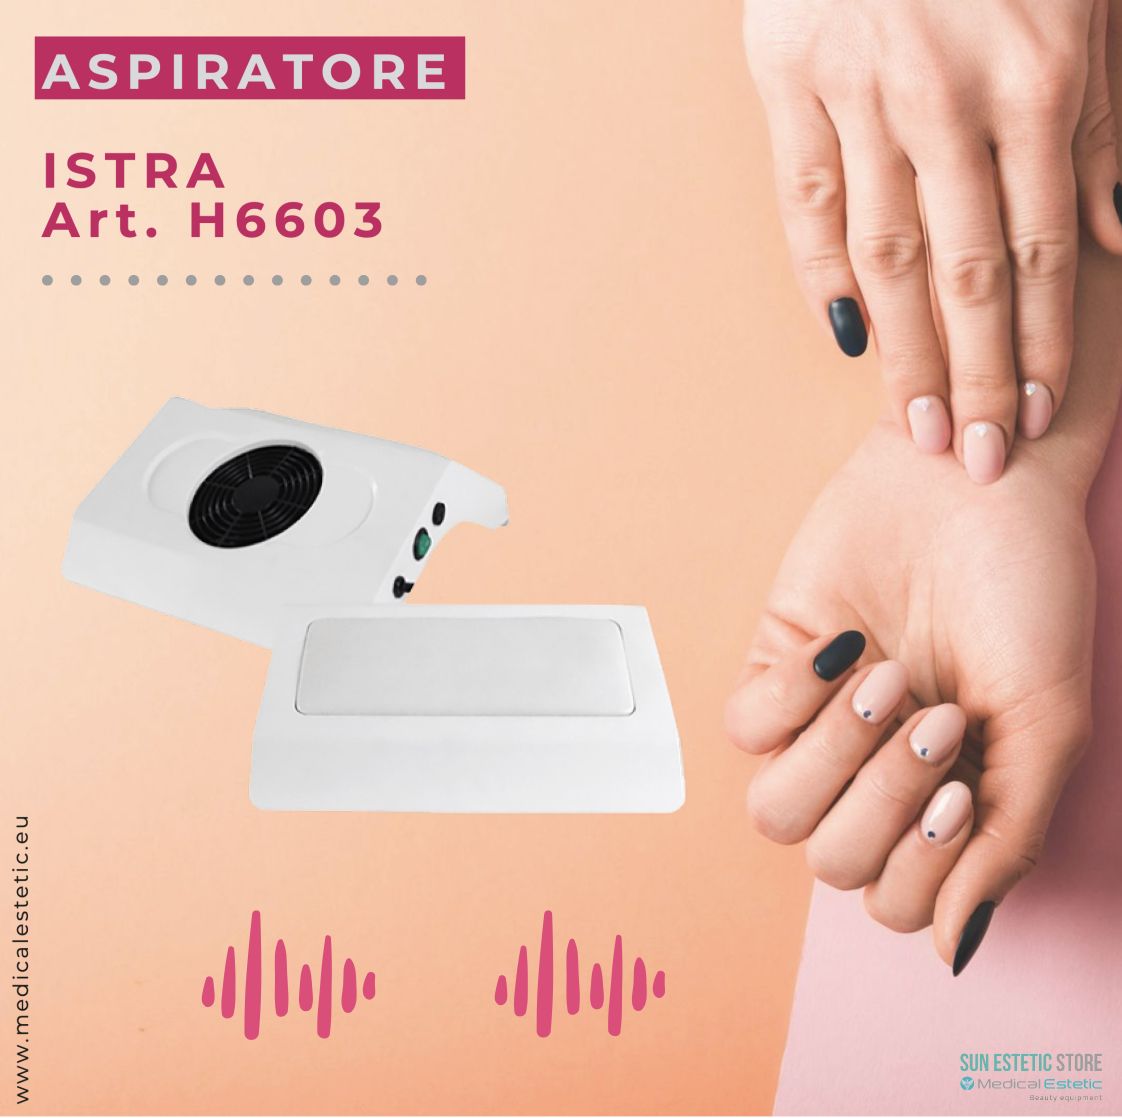 ISTRA aspiratore nails